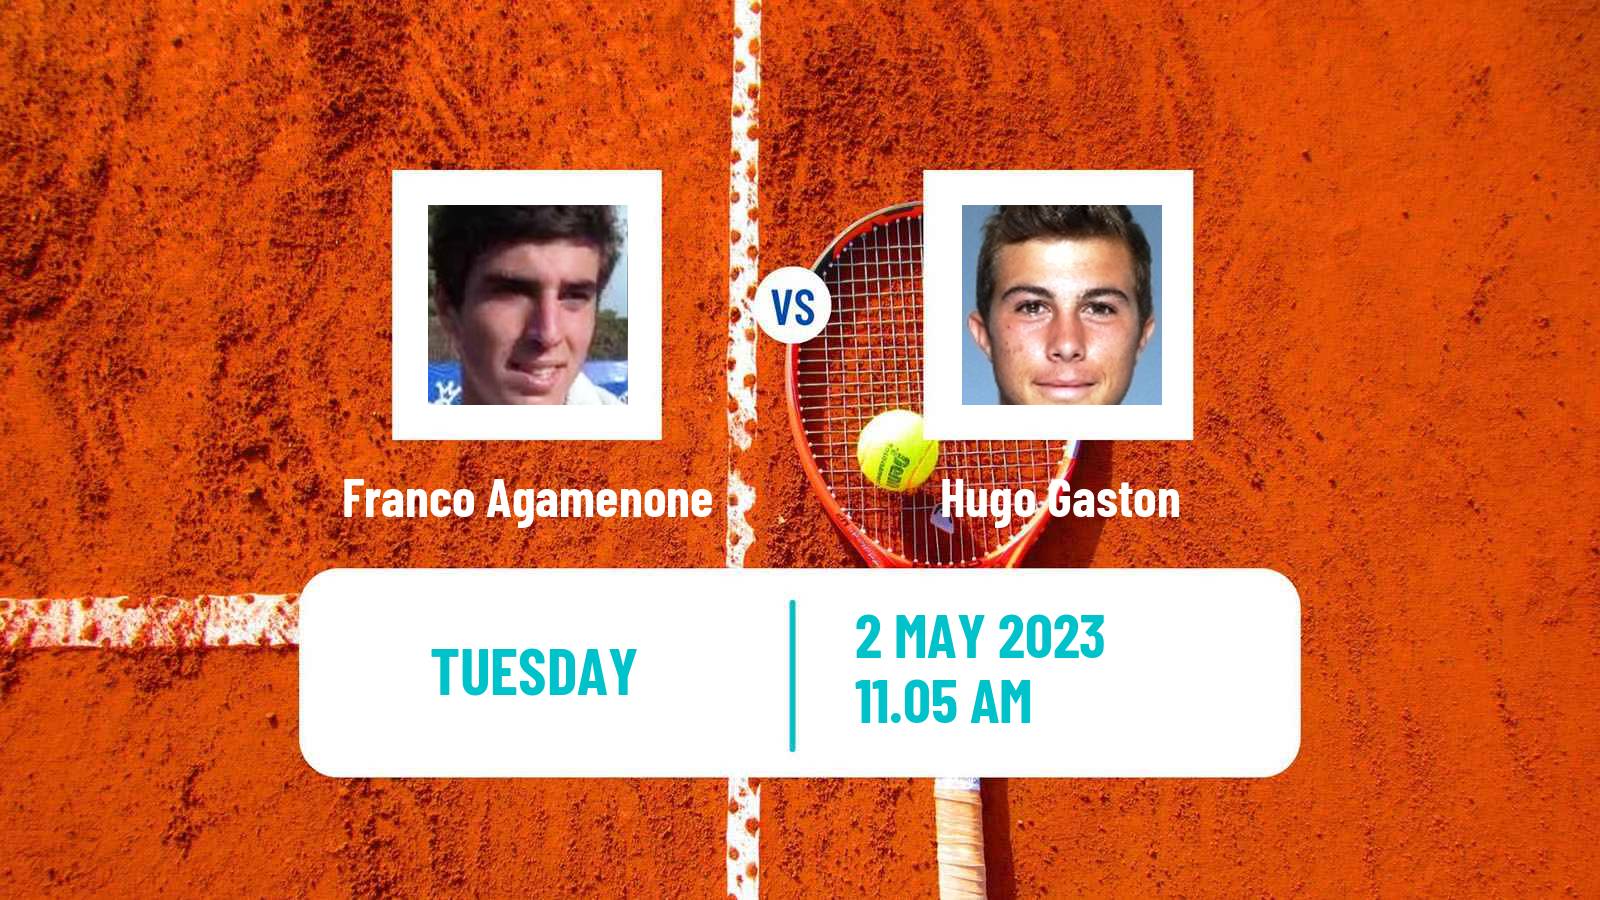 Tennis ATP Challenger Franco Agamenone - Hugo Gaston